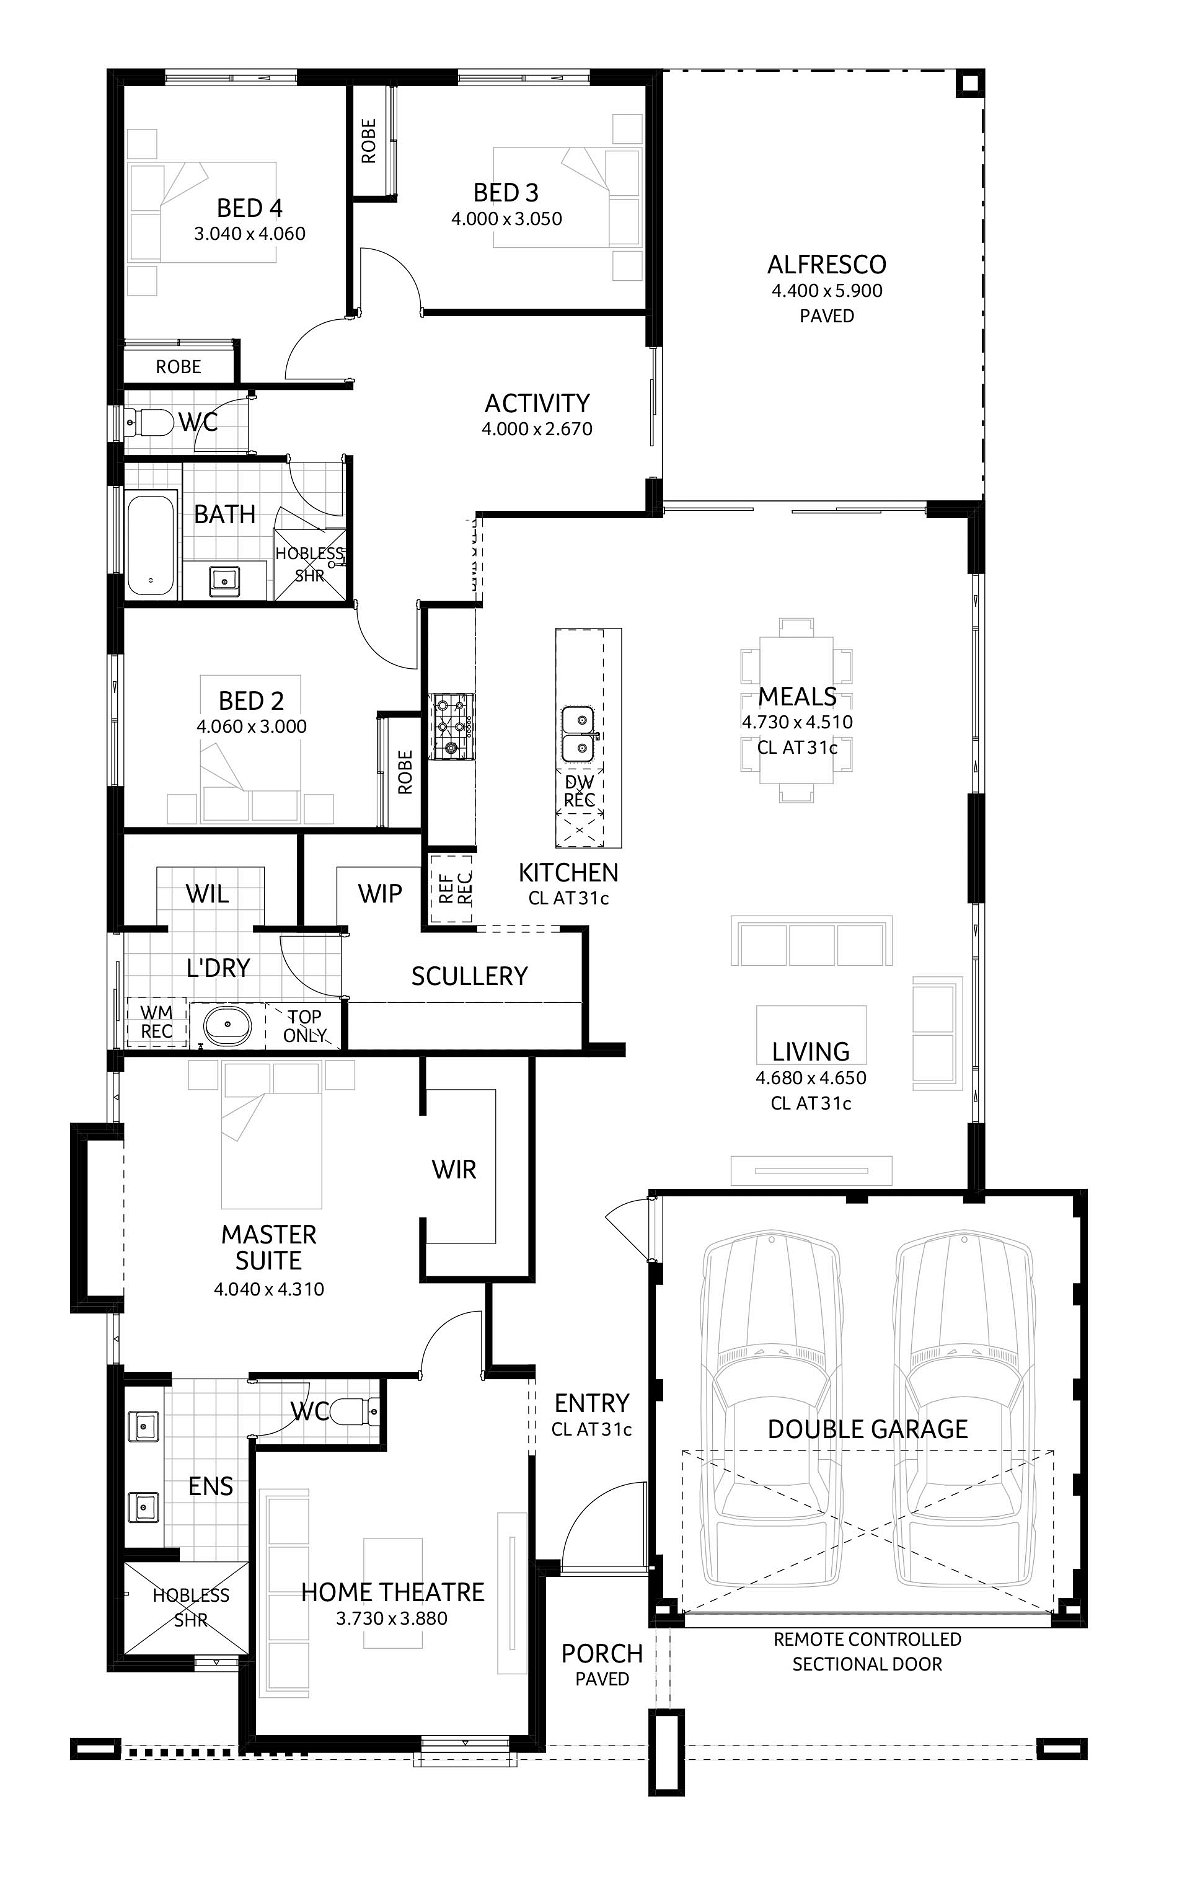 Plunkett Homes - Santana | Contemporary - Floorplan - Santana Luxe Contemporary Marketing Plan Croppedjpg